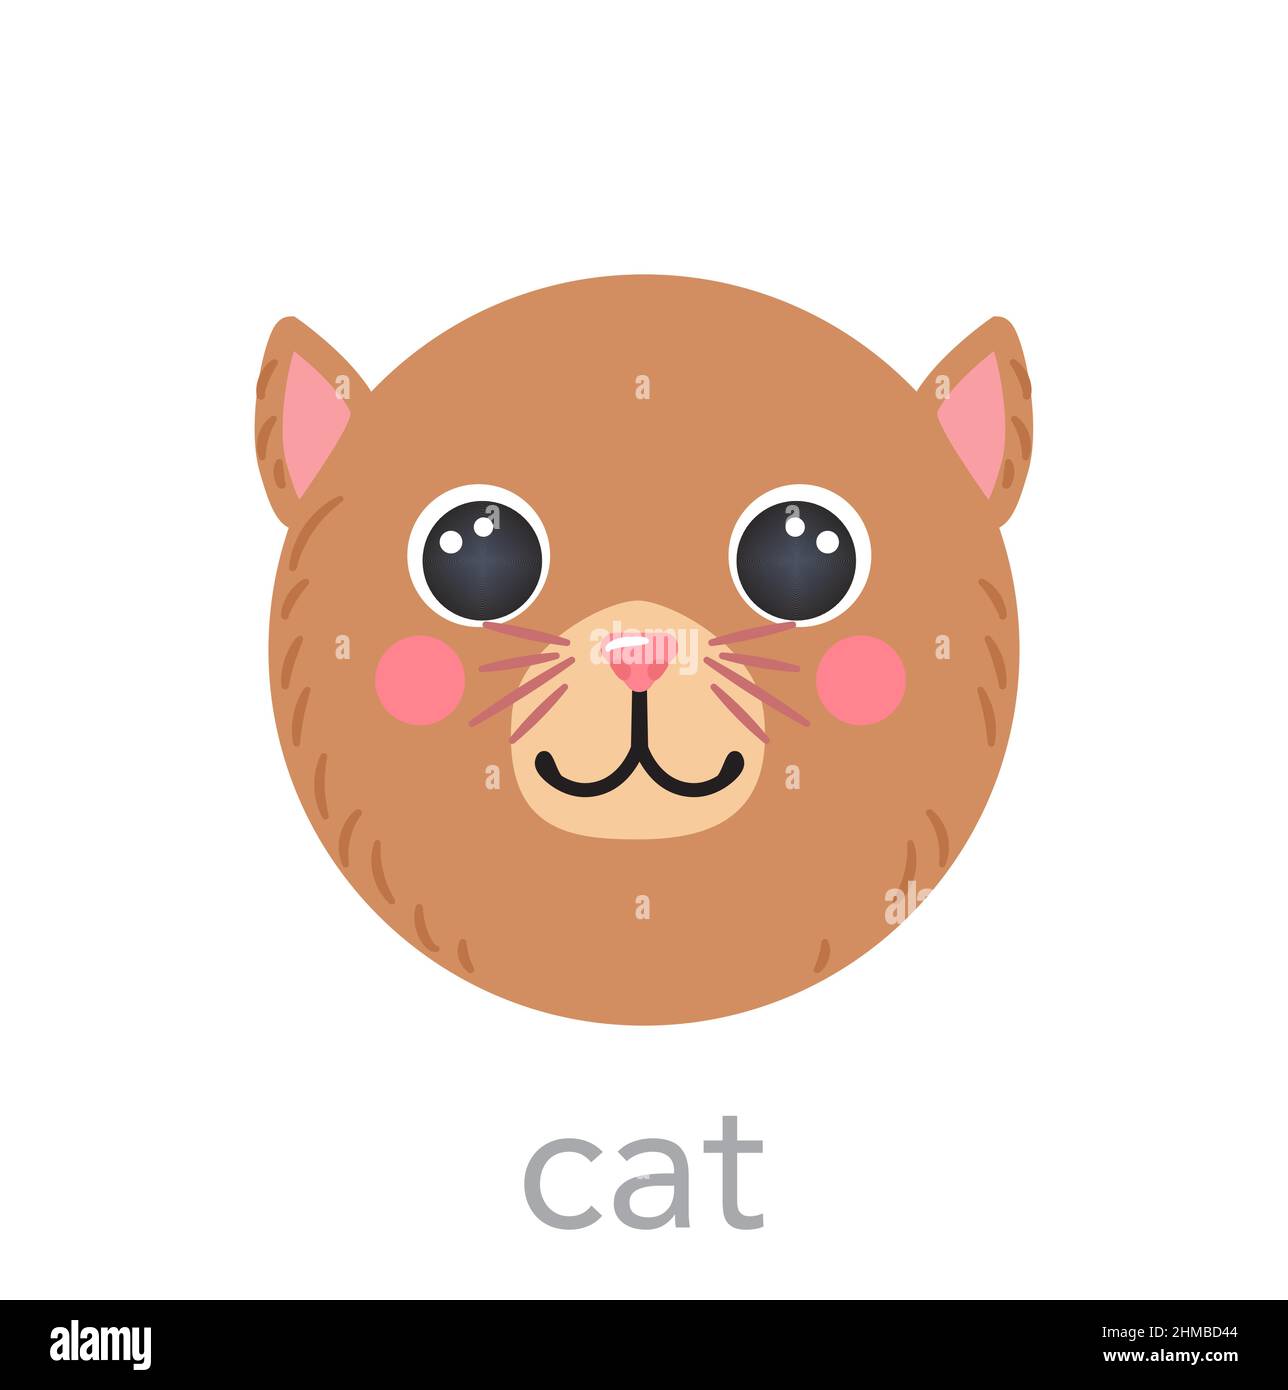 Cartoons, Cat, Rectangular, rounded, Cats, Animal, Animals, head, Cartoon  icon